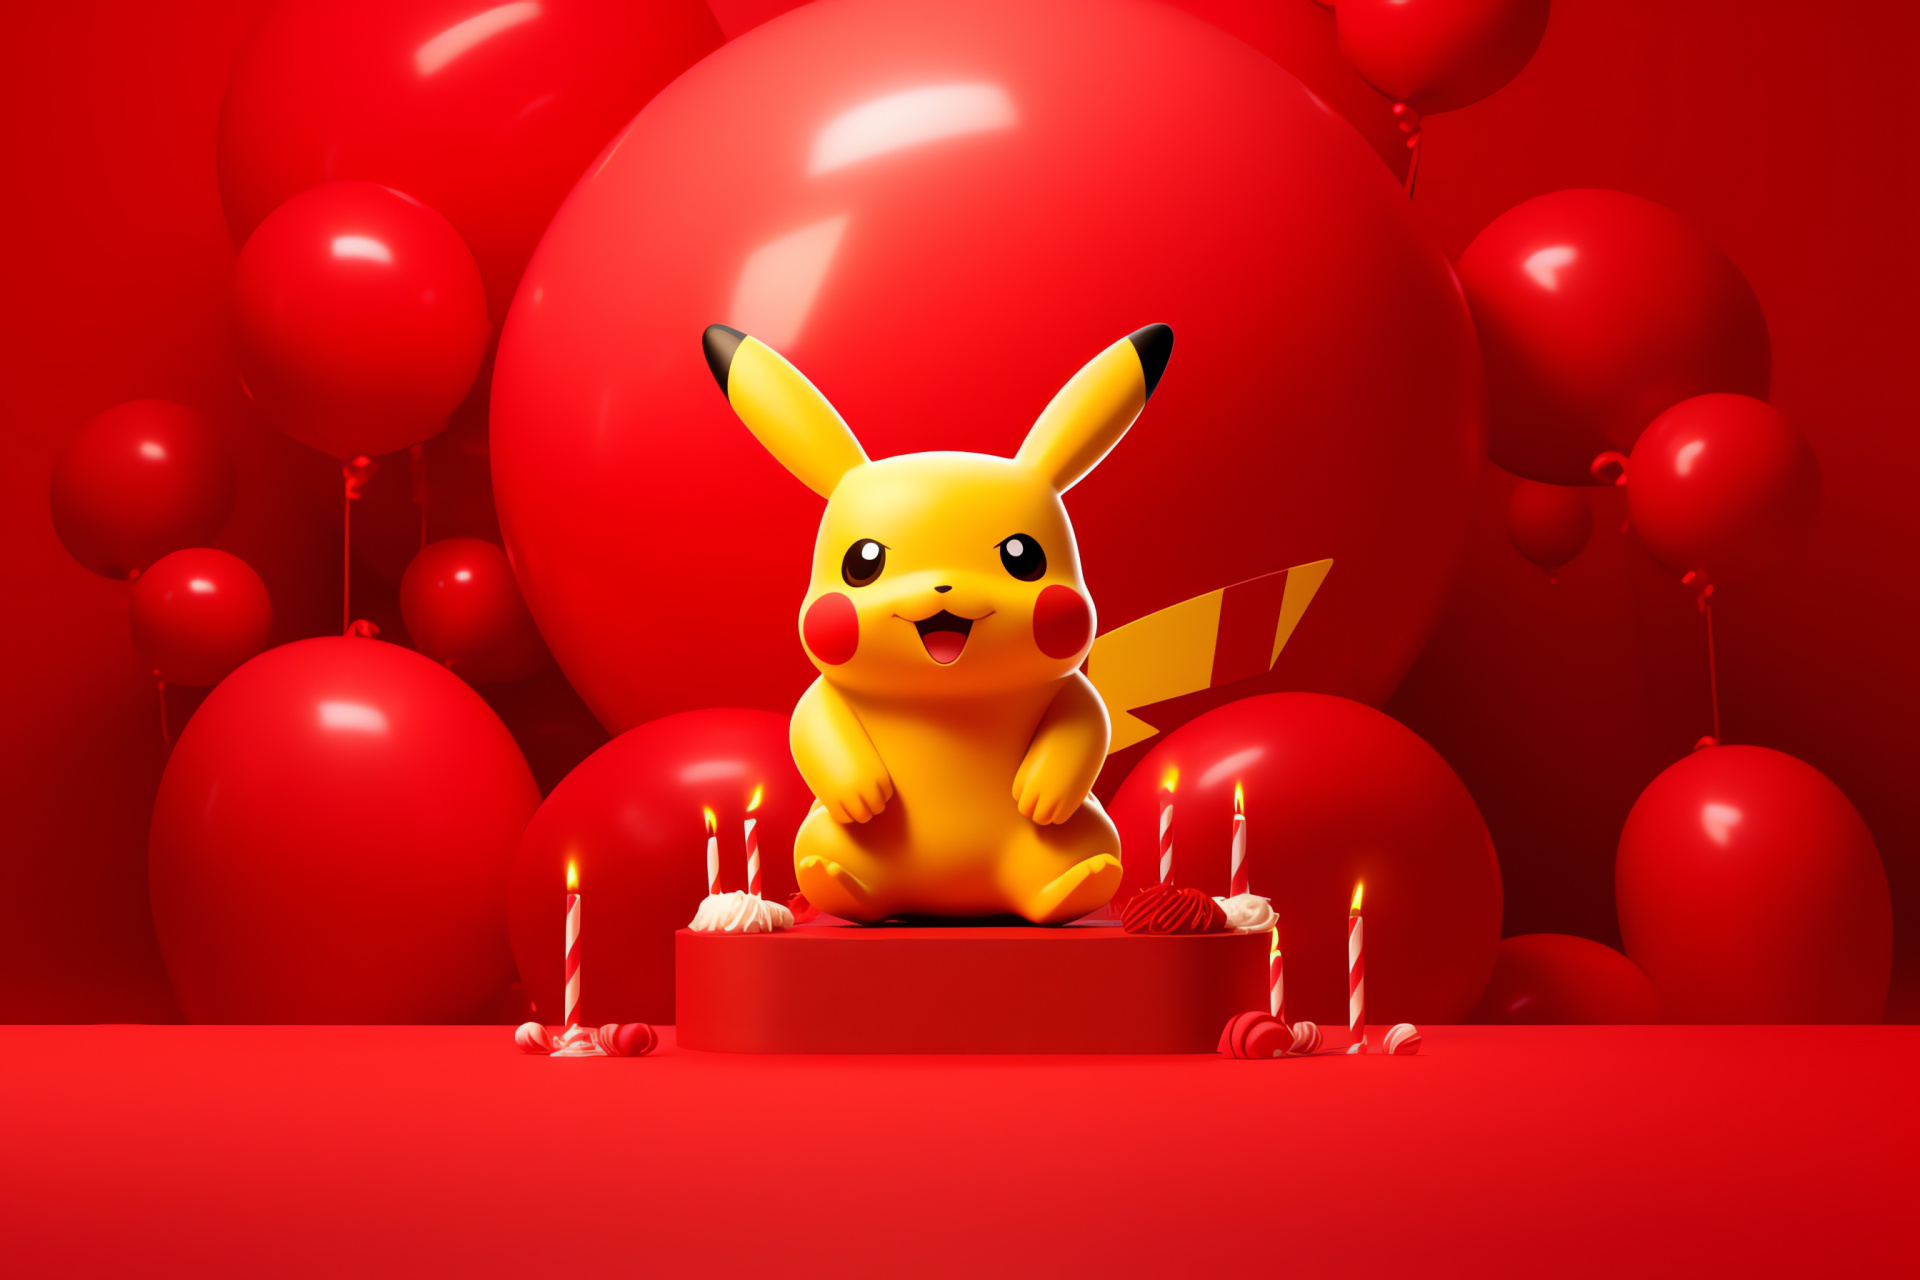 Electric Pokmon, Nintendo yellow mascot, Expressive eye features, Joyful energy, Cartoon companion, HD Desktop Image